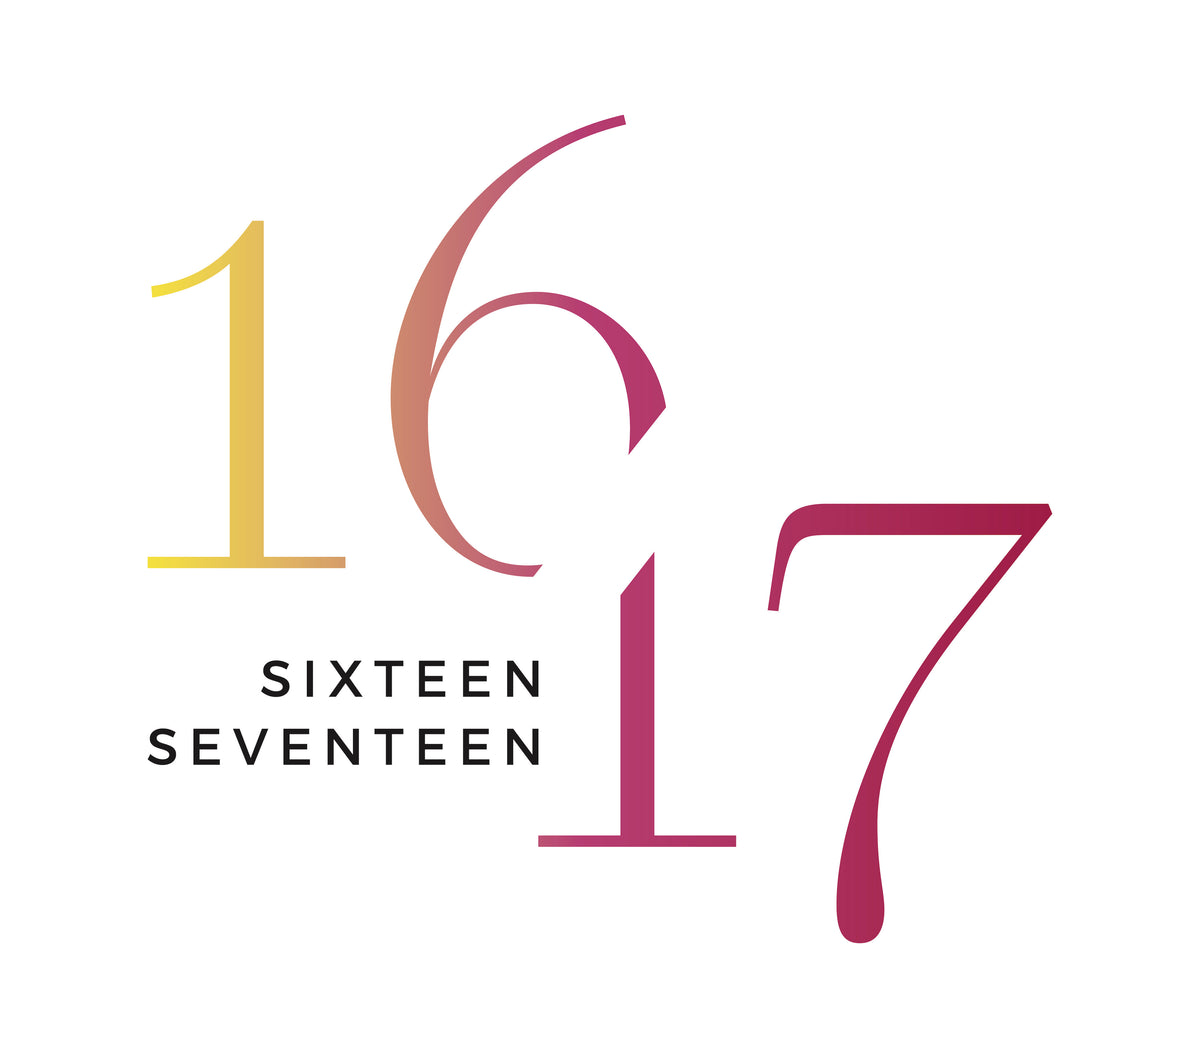 That's So Shaen Fragrance Oil – Sixteen Seventeen